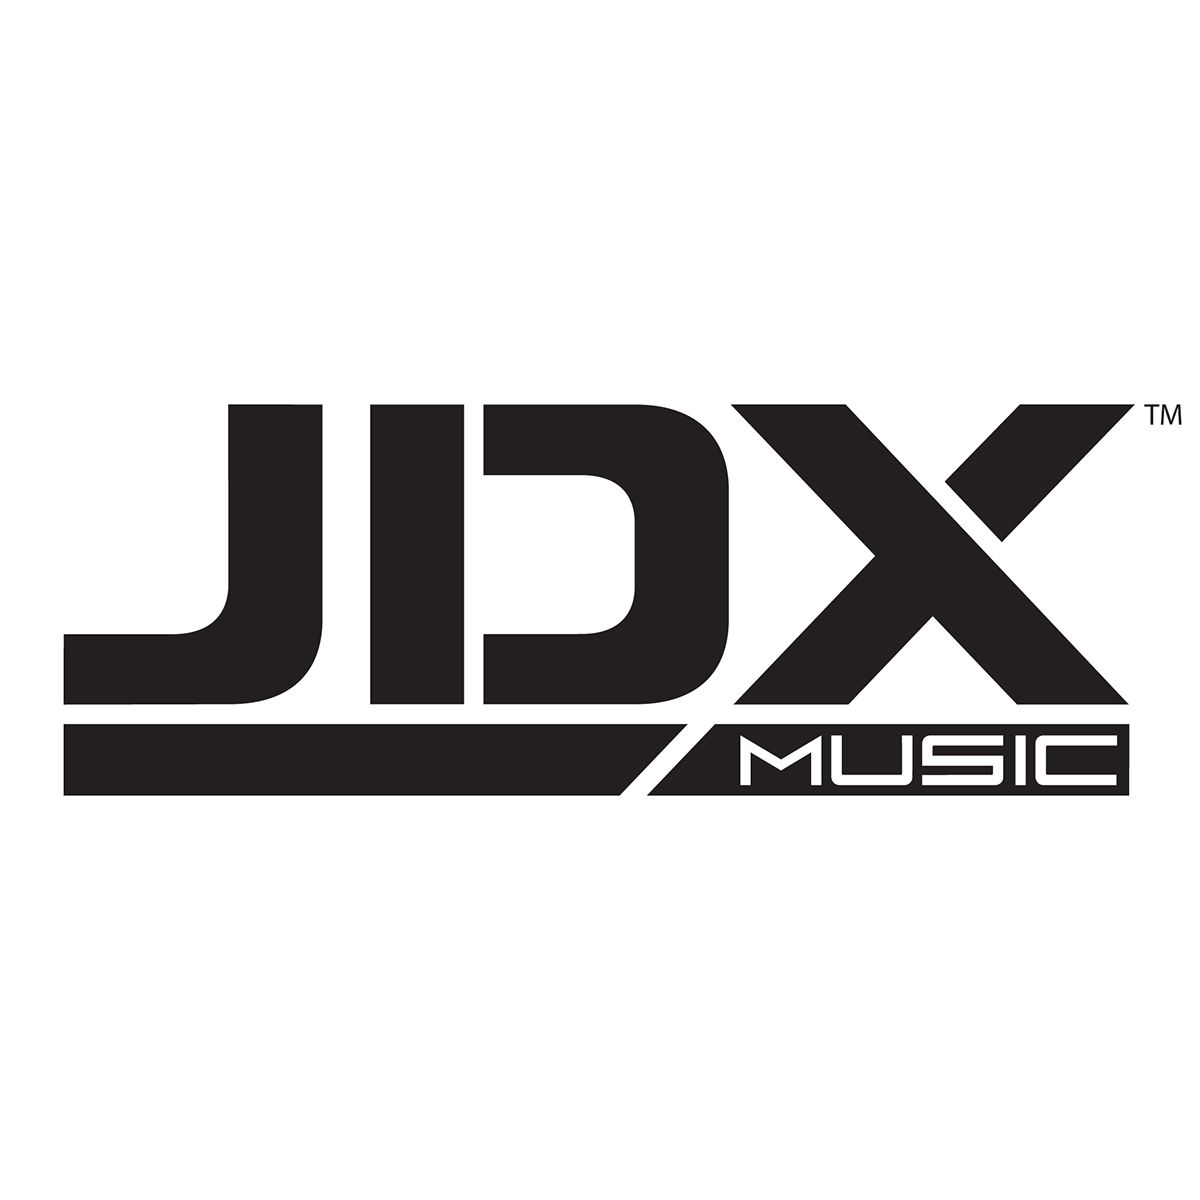 Monochrome JDX Music logo.